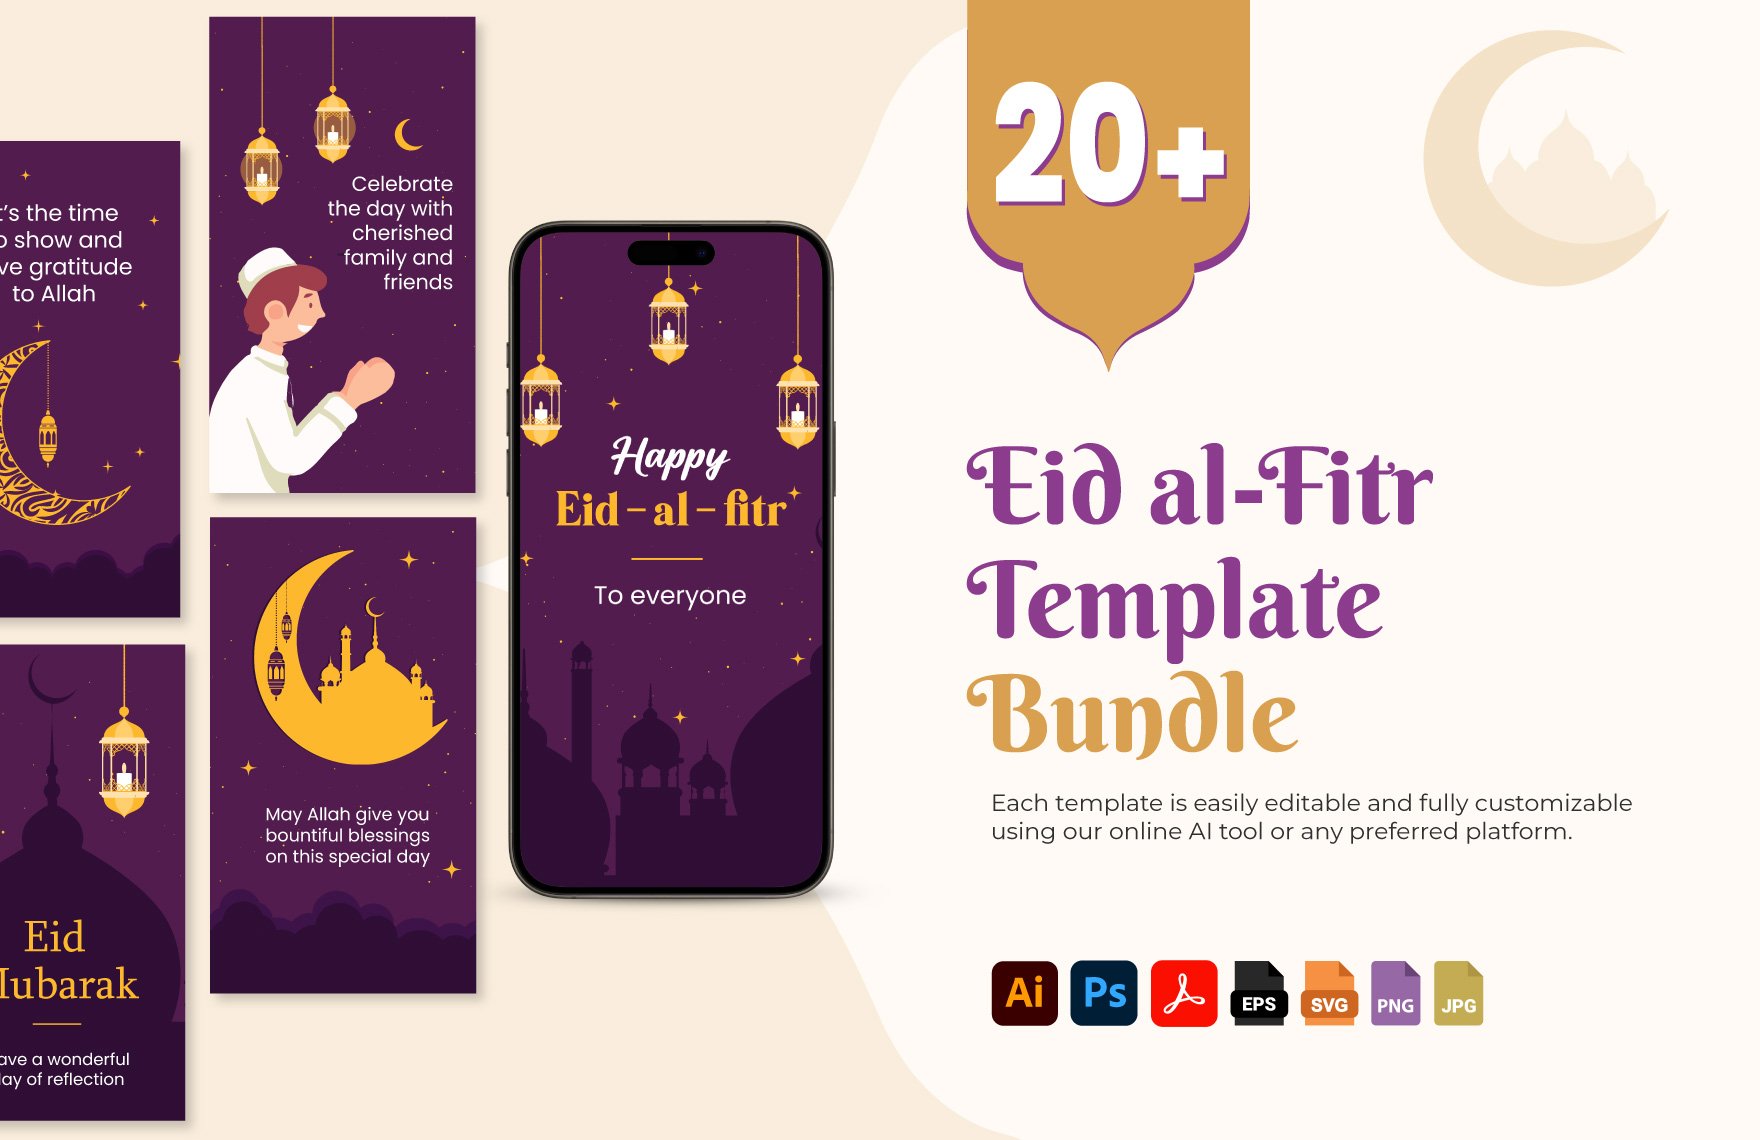 Free 20+ Eid al-Fitr Template Bundle